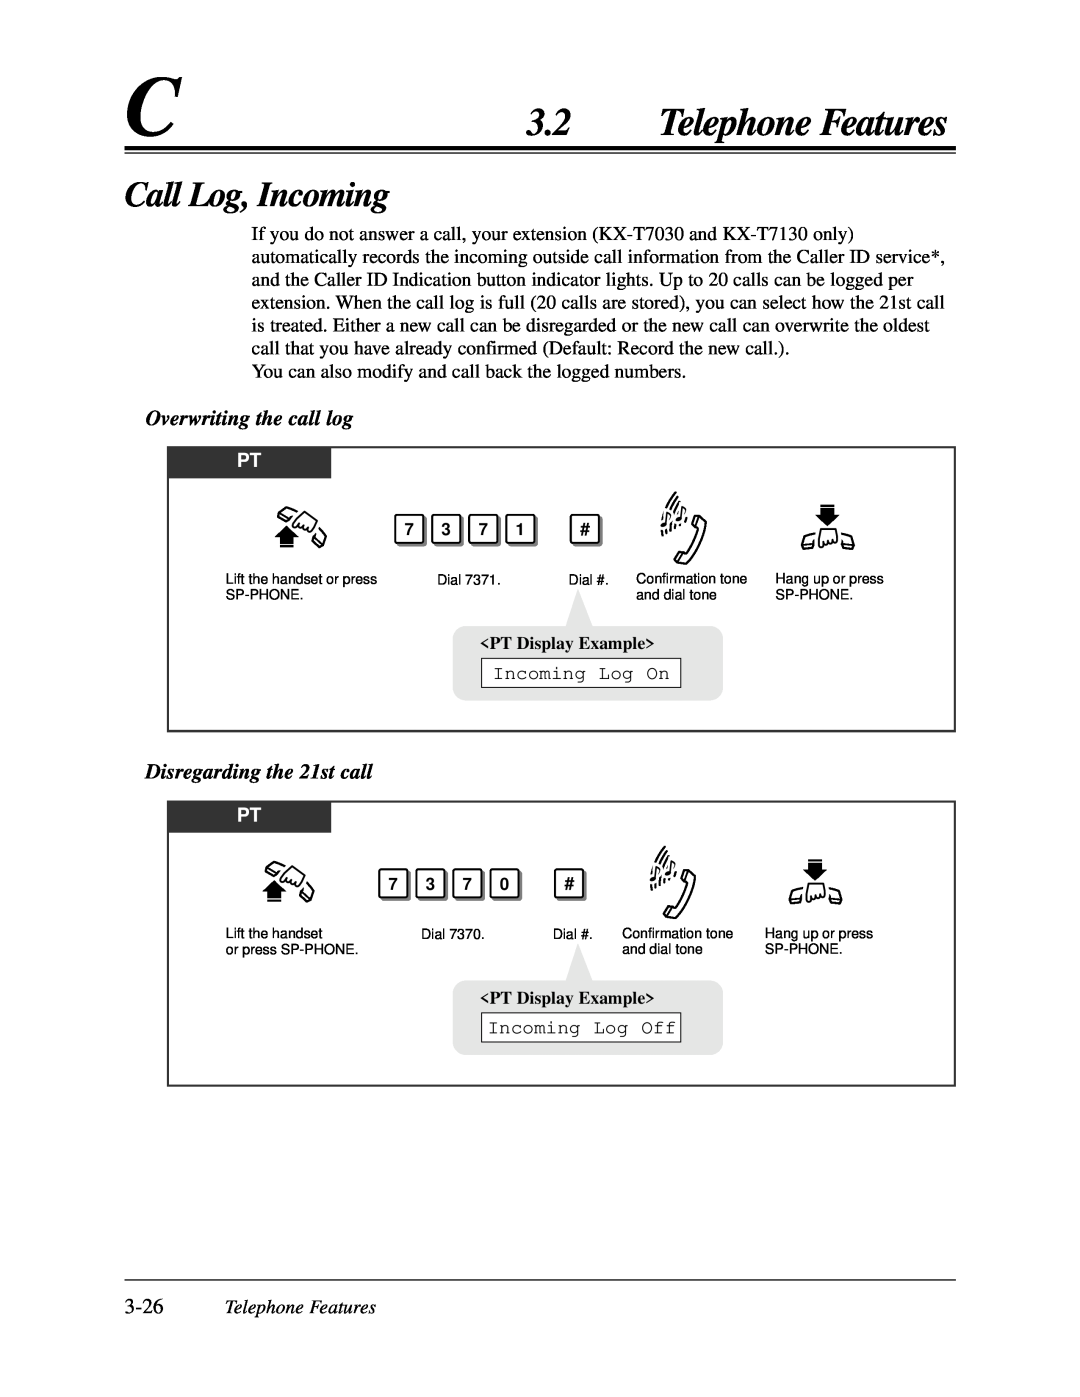 Panasonic KX-TA624 user manual Call Log, Incoming, Disregarding the 21st call, 3.2Telephone Features 